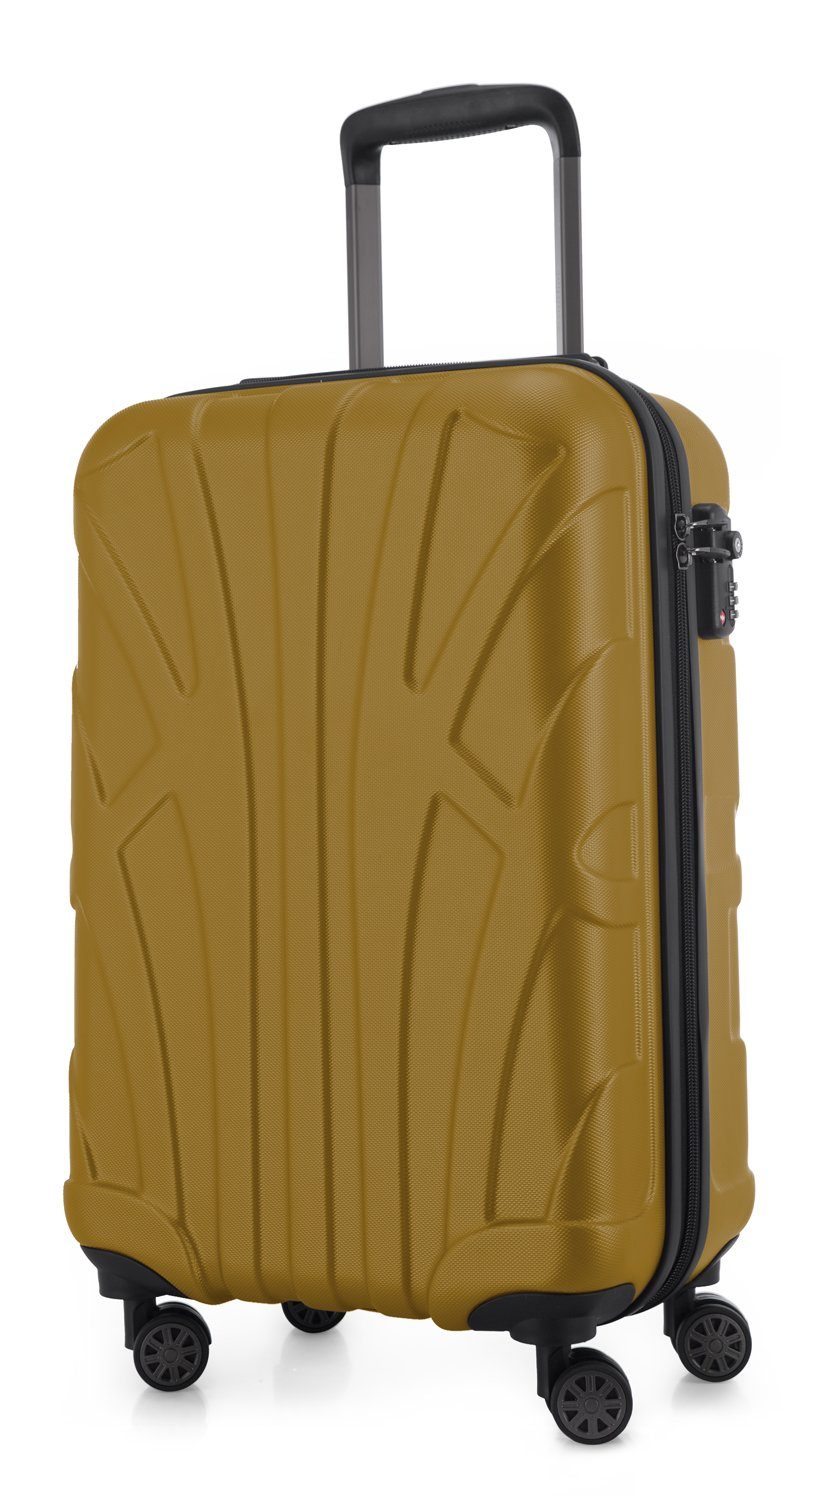 Suitline Handgepäckkoffer S1, 4 Rollen, Robust, Leicht, TSA Zahlenschloss, 55 cm, 33 L Packvolumen Herbstgold